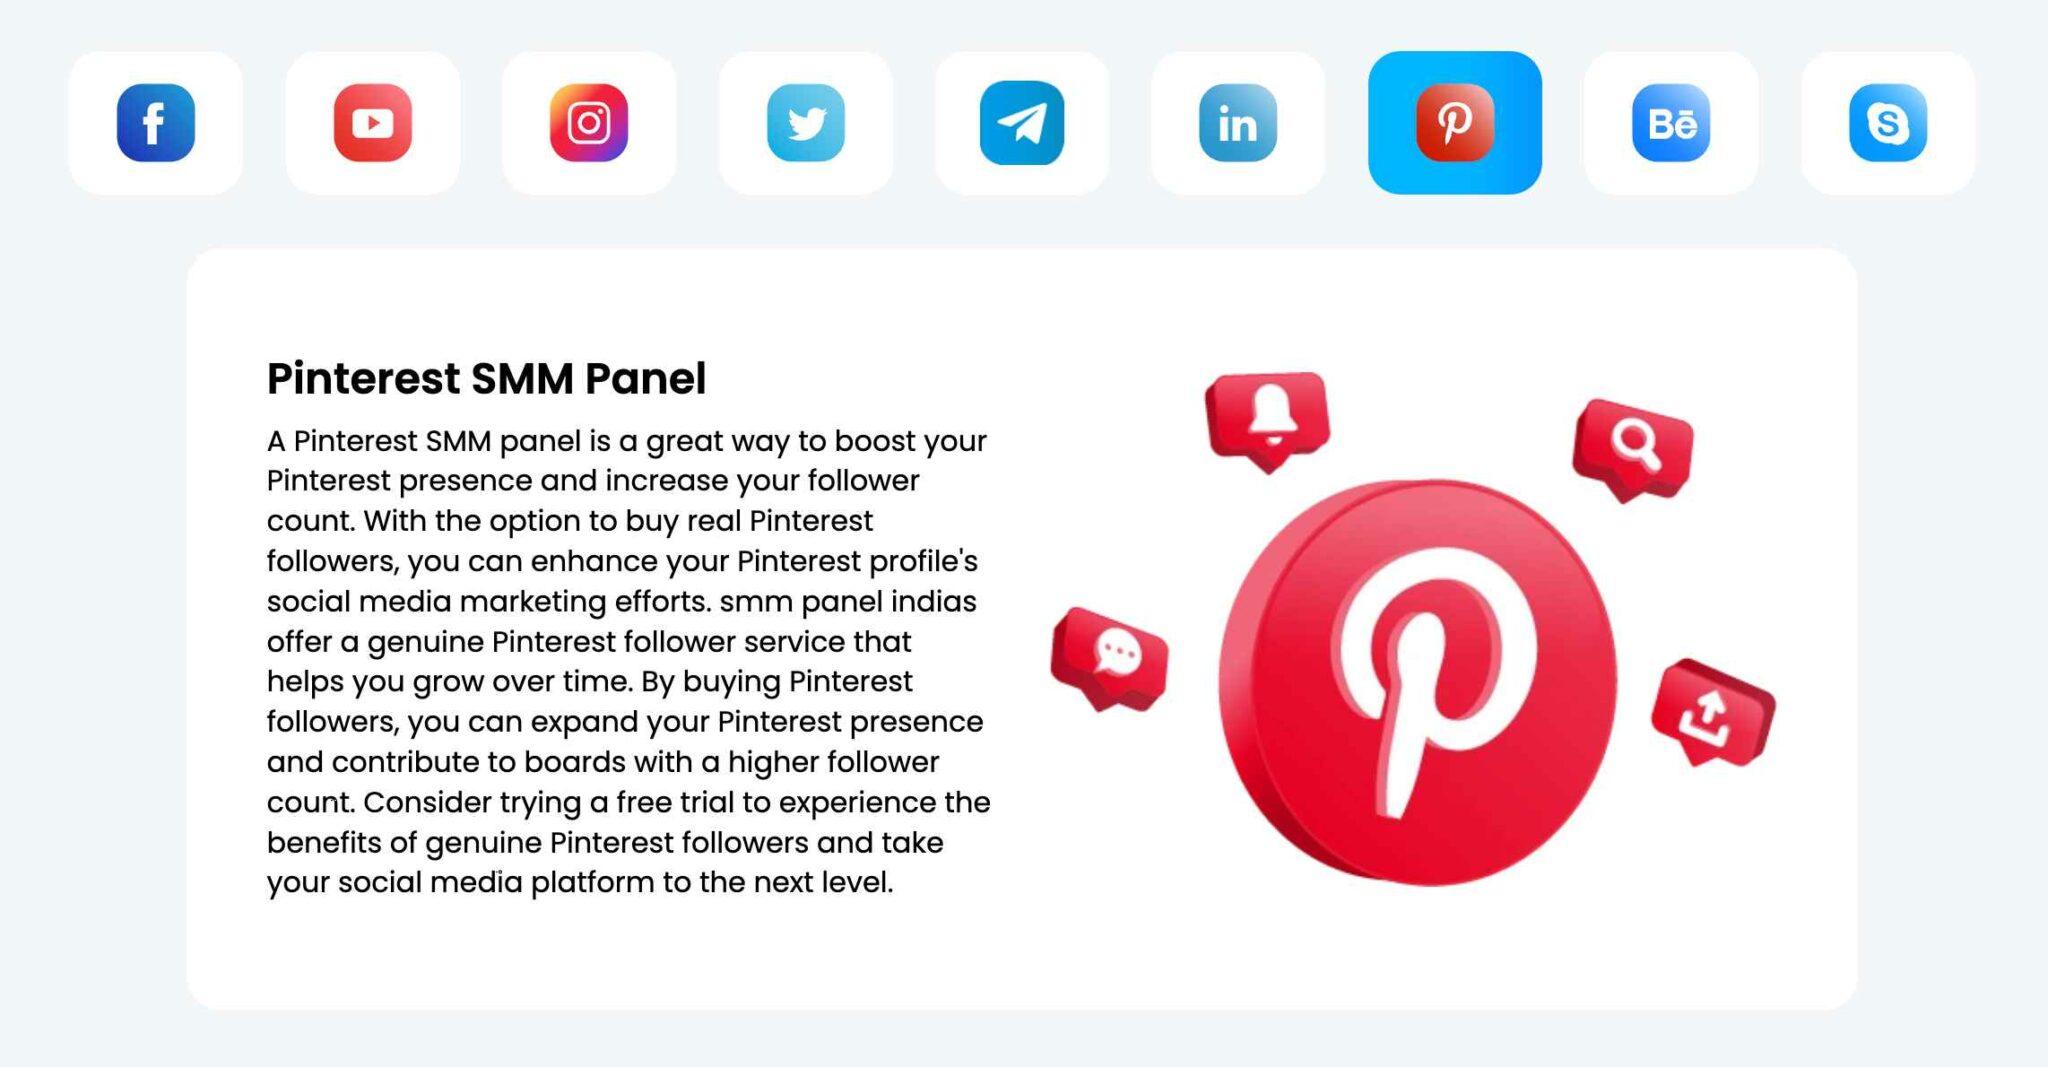 Pinterest SMM Panel